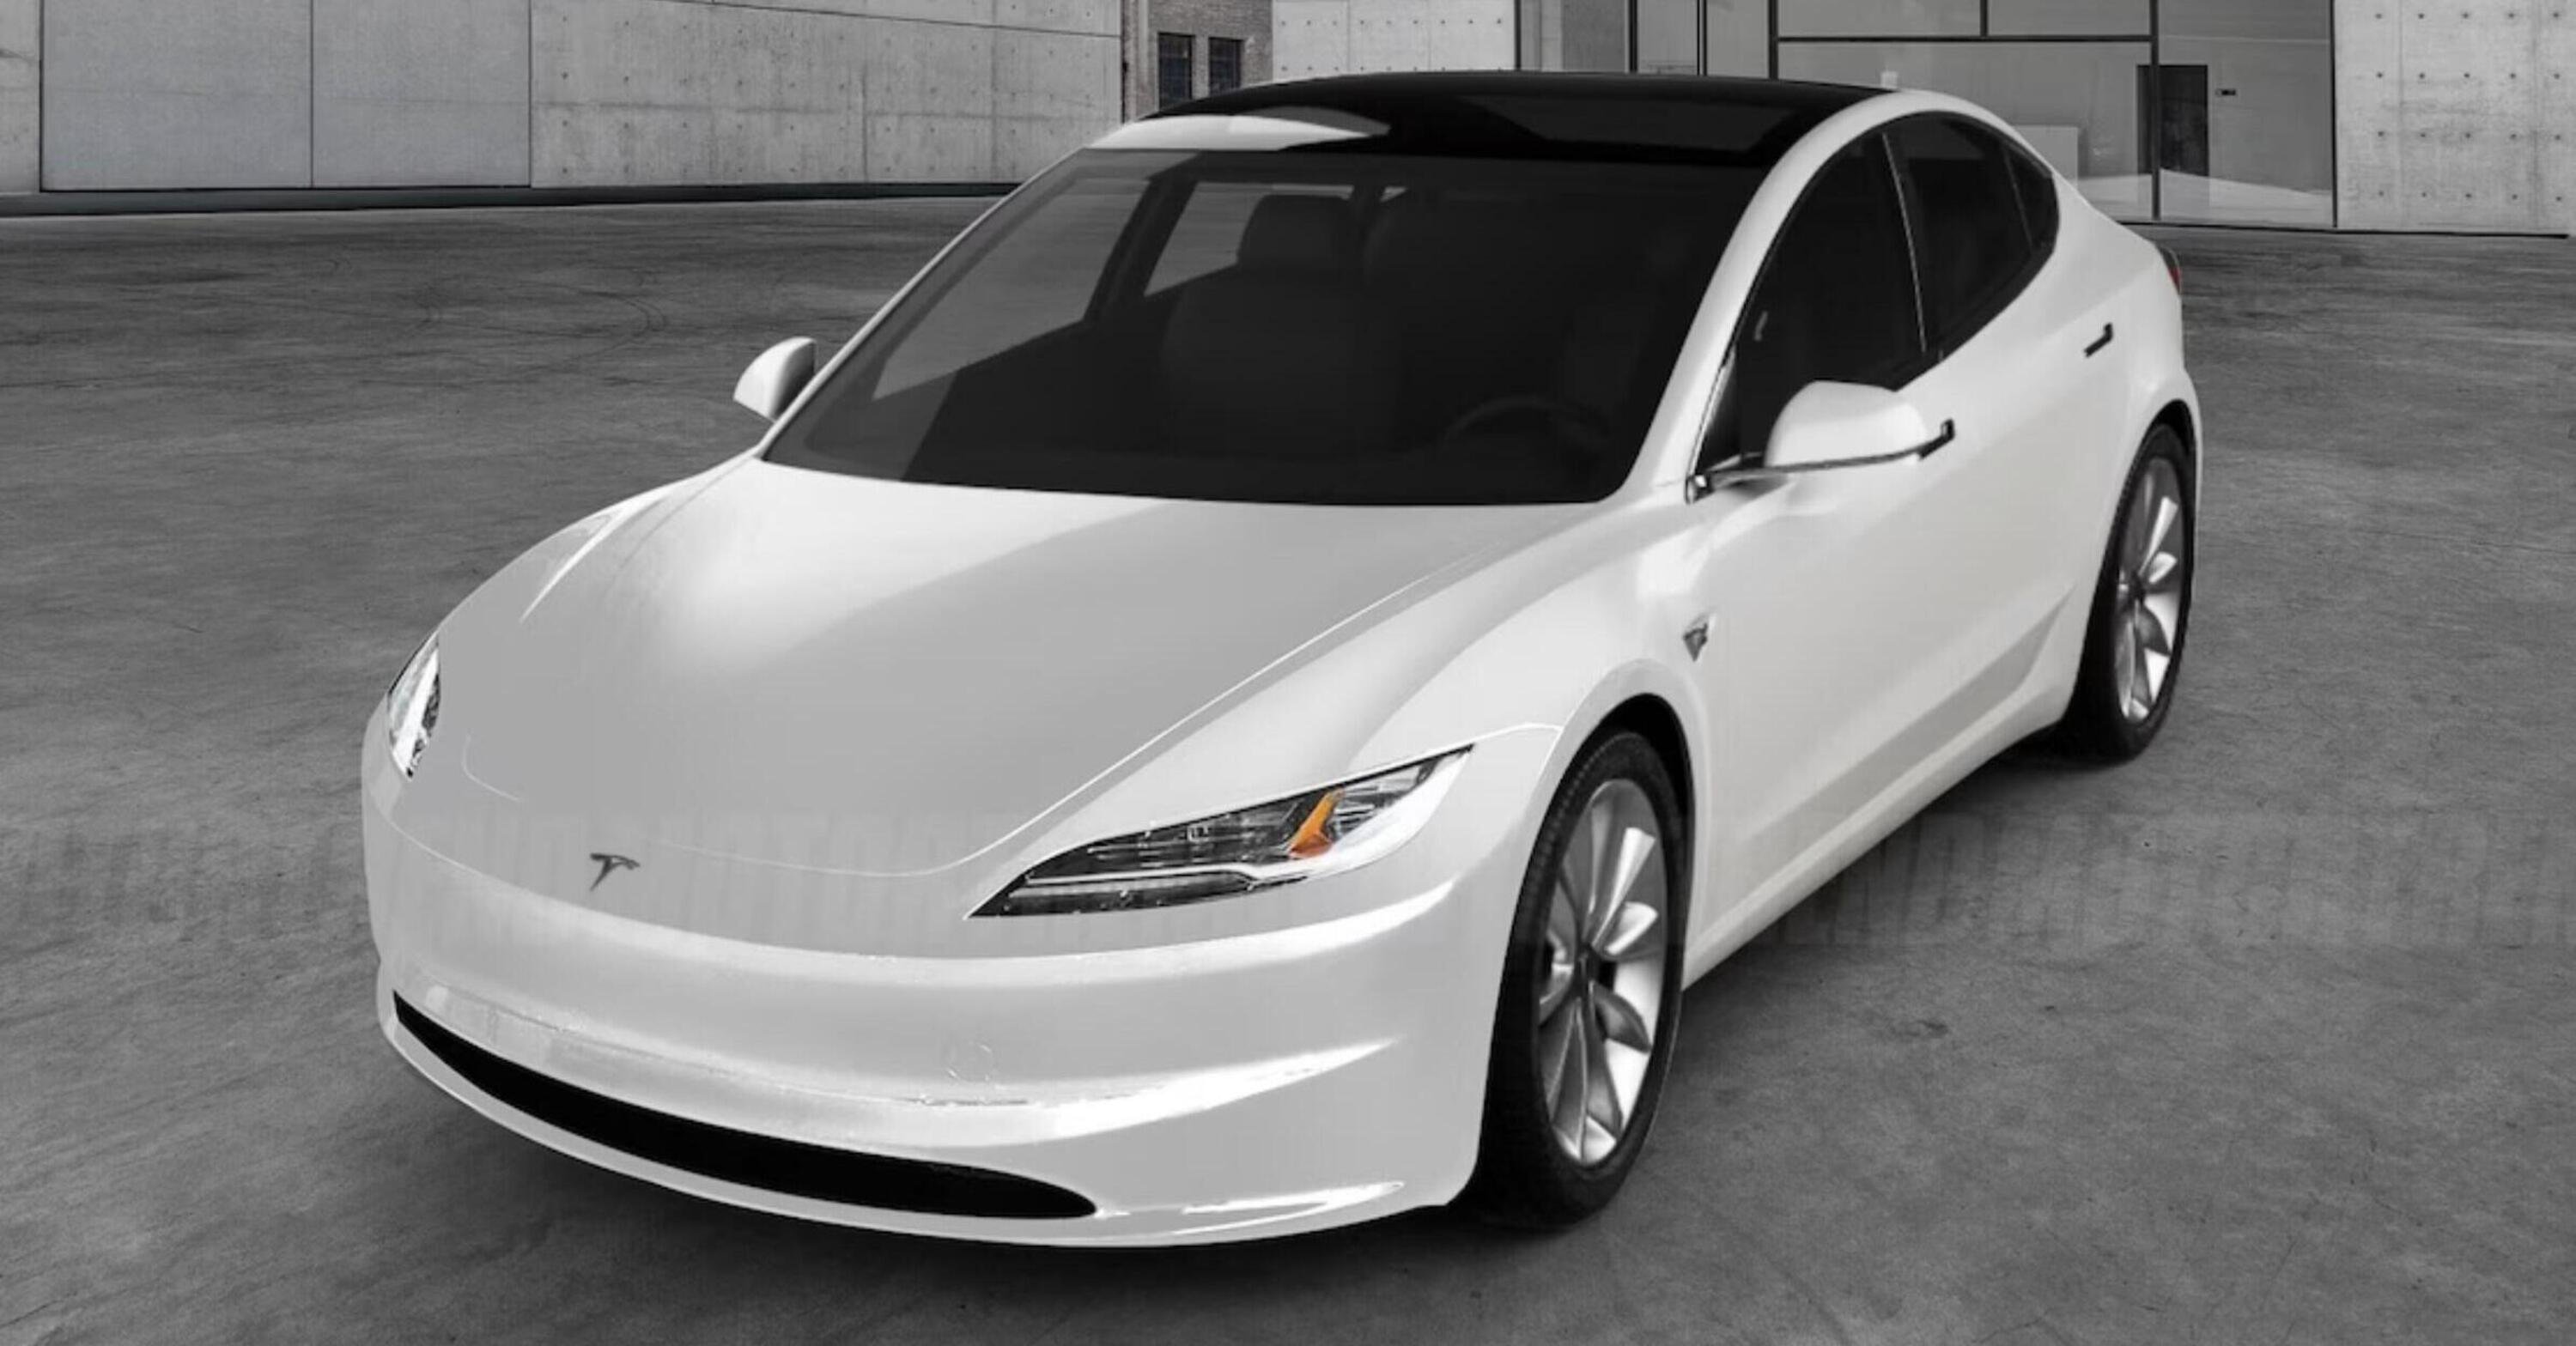 Tesla Model 3 Highland nuovo frontale ecco il rendering Elettrico Automoto.it